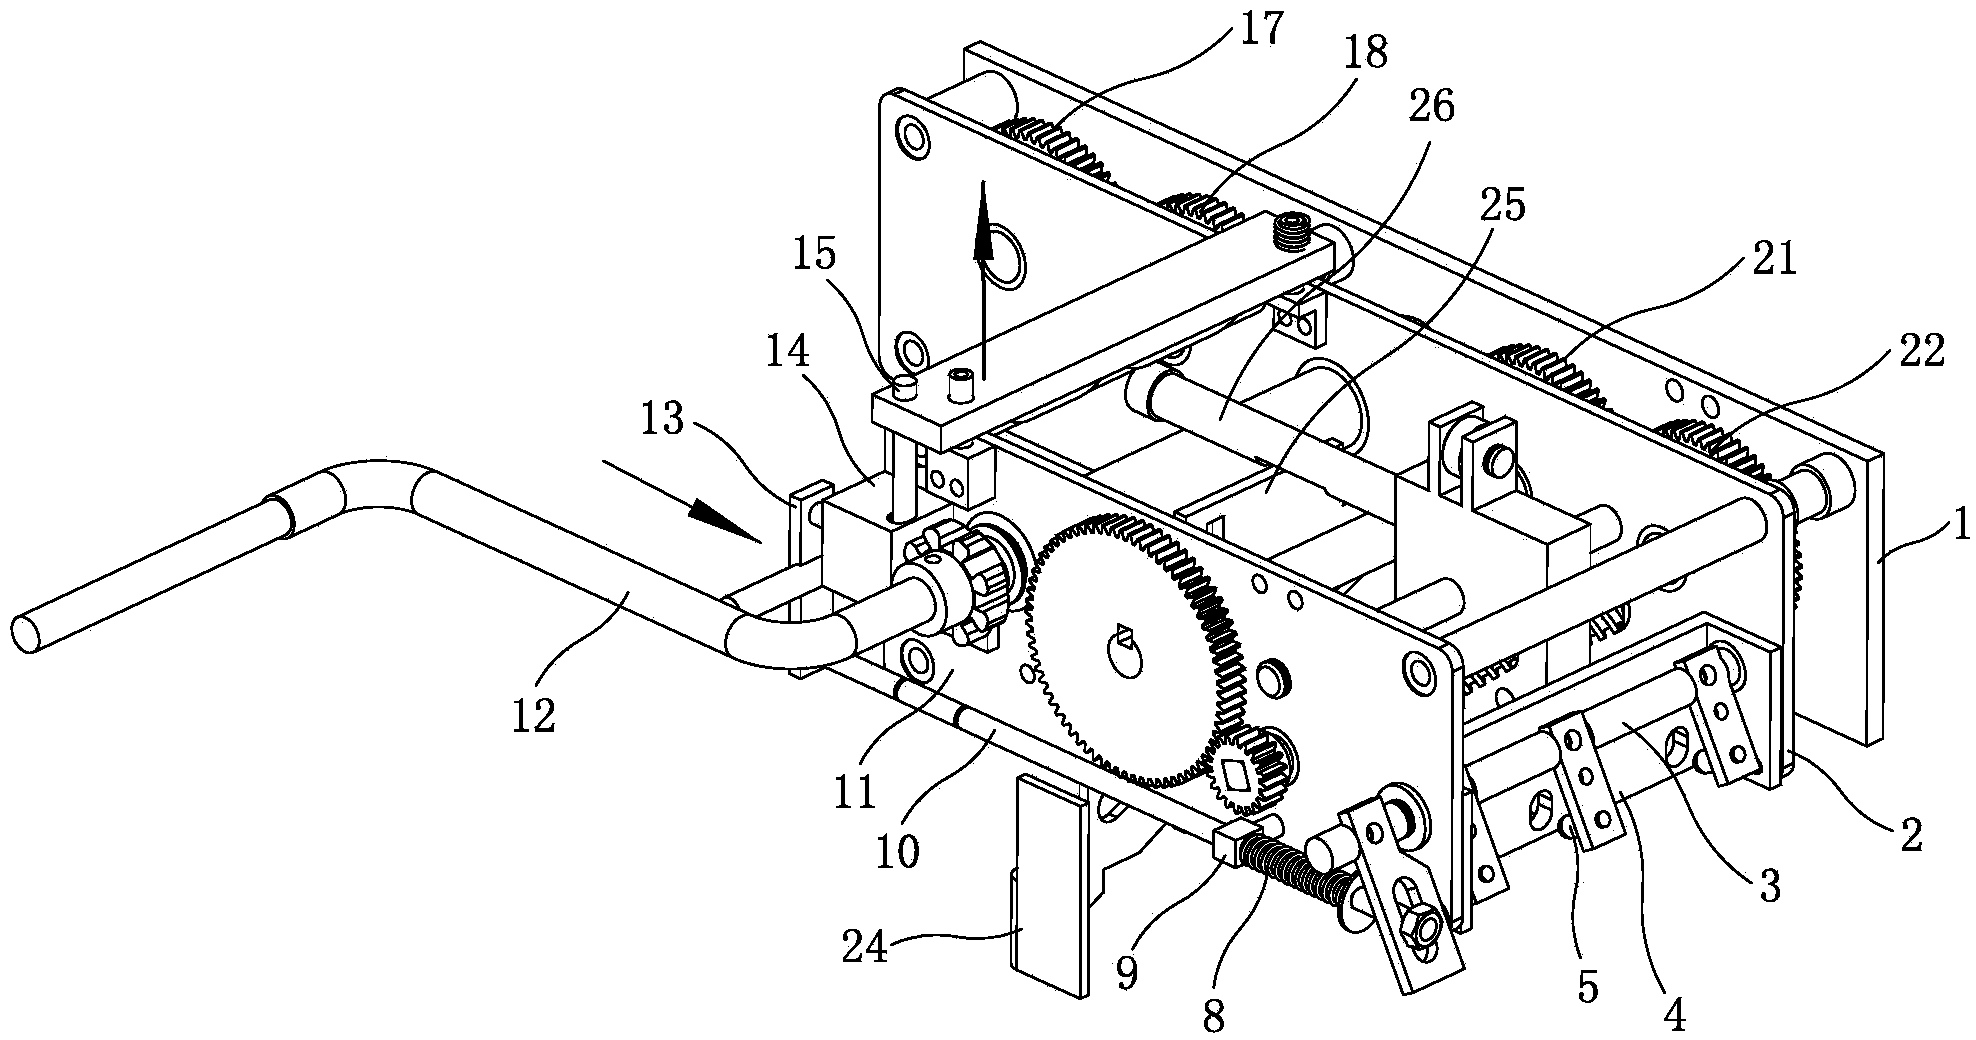 Operation-handle-locking-type three-station mechanism and operation method thereof